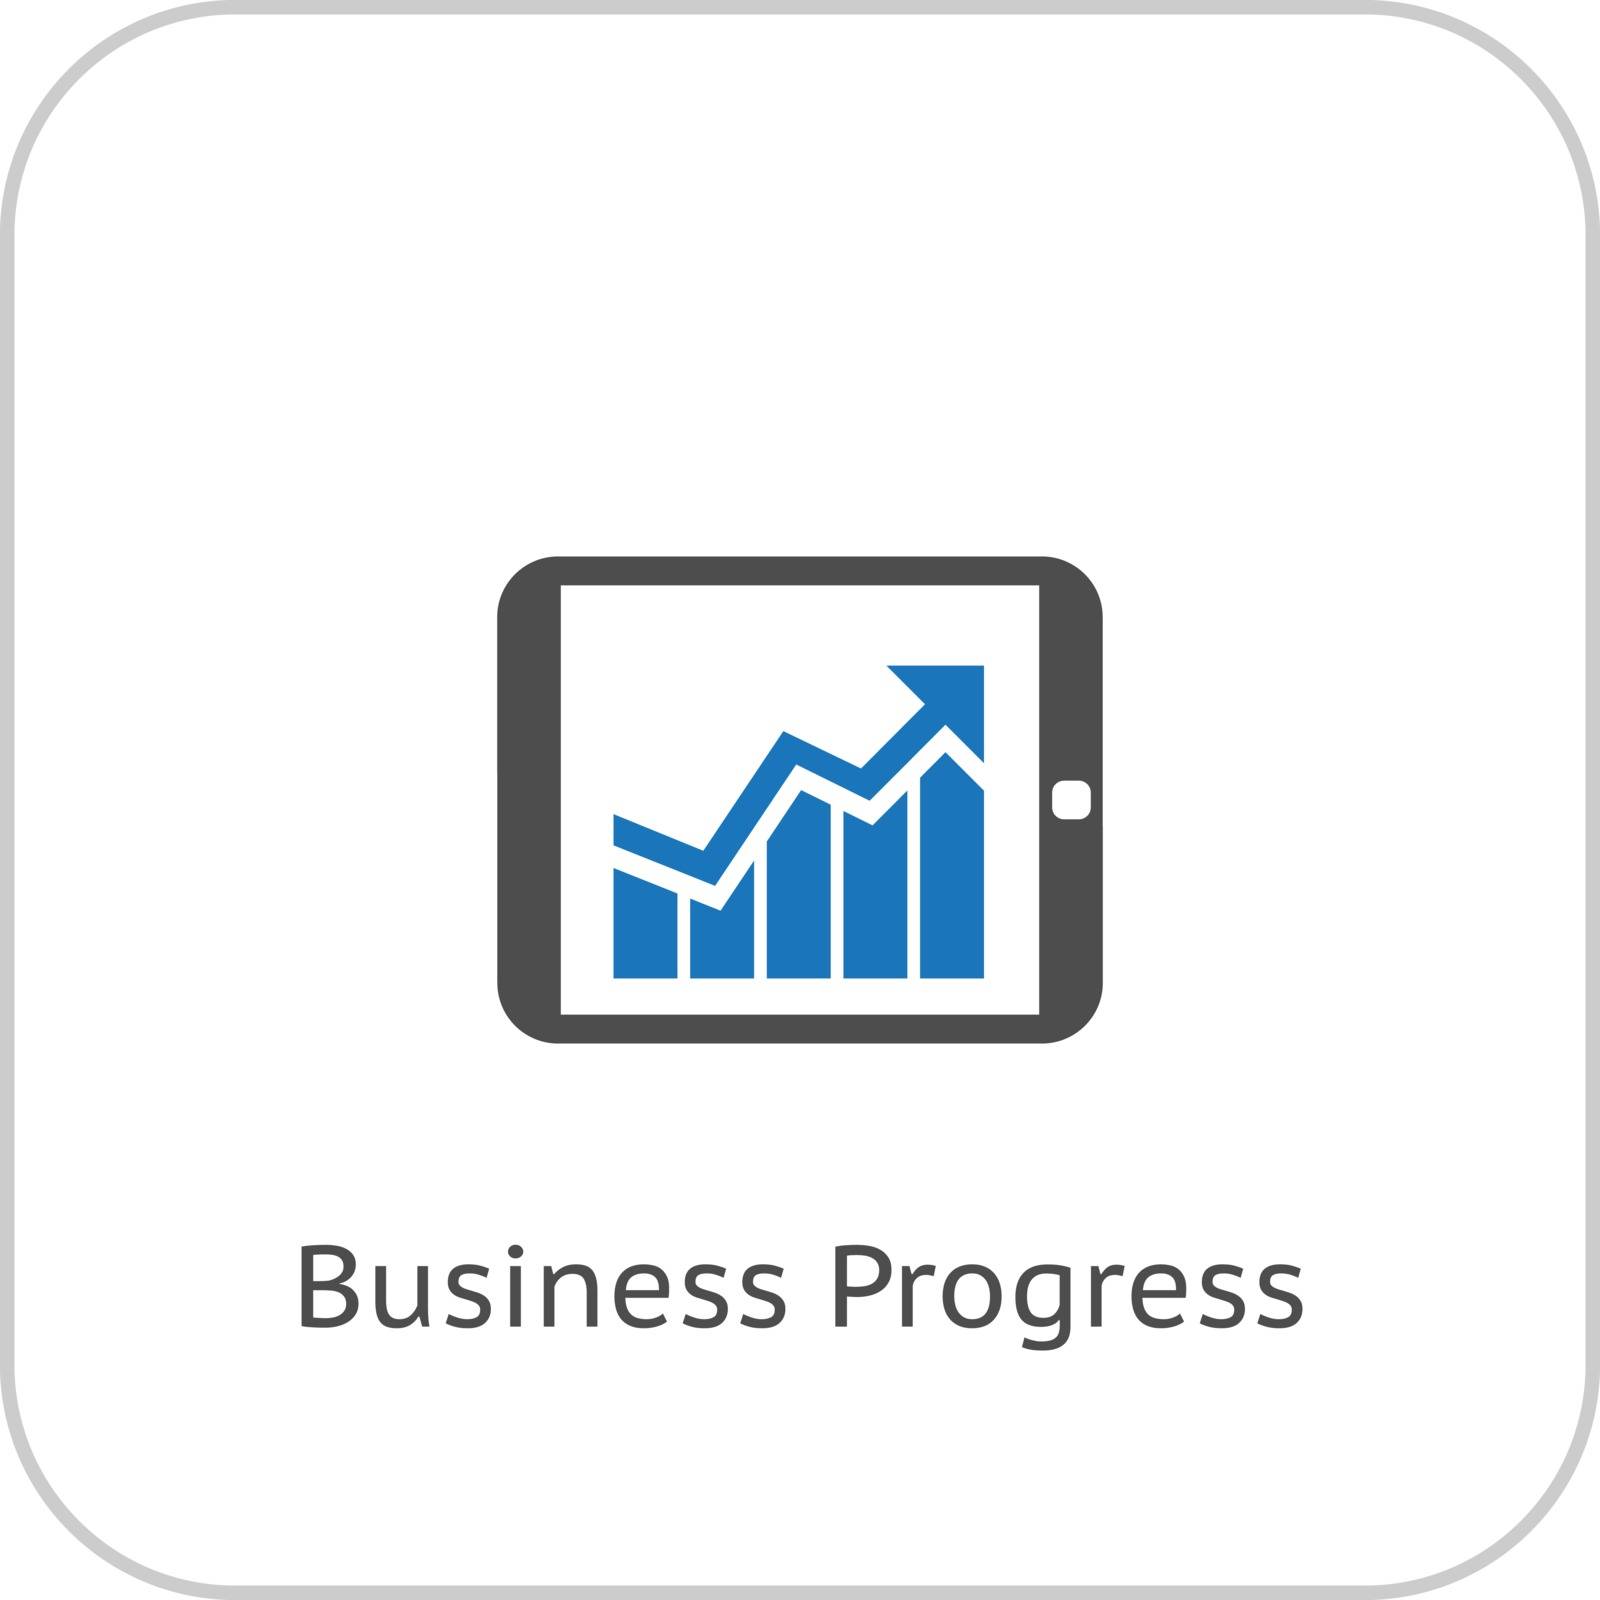 Business Progress Icon. Flat Design. by WaD